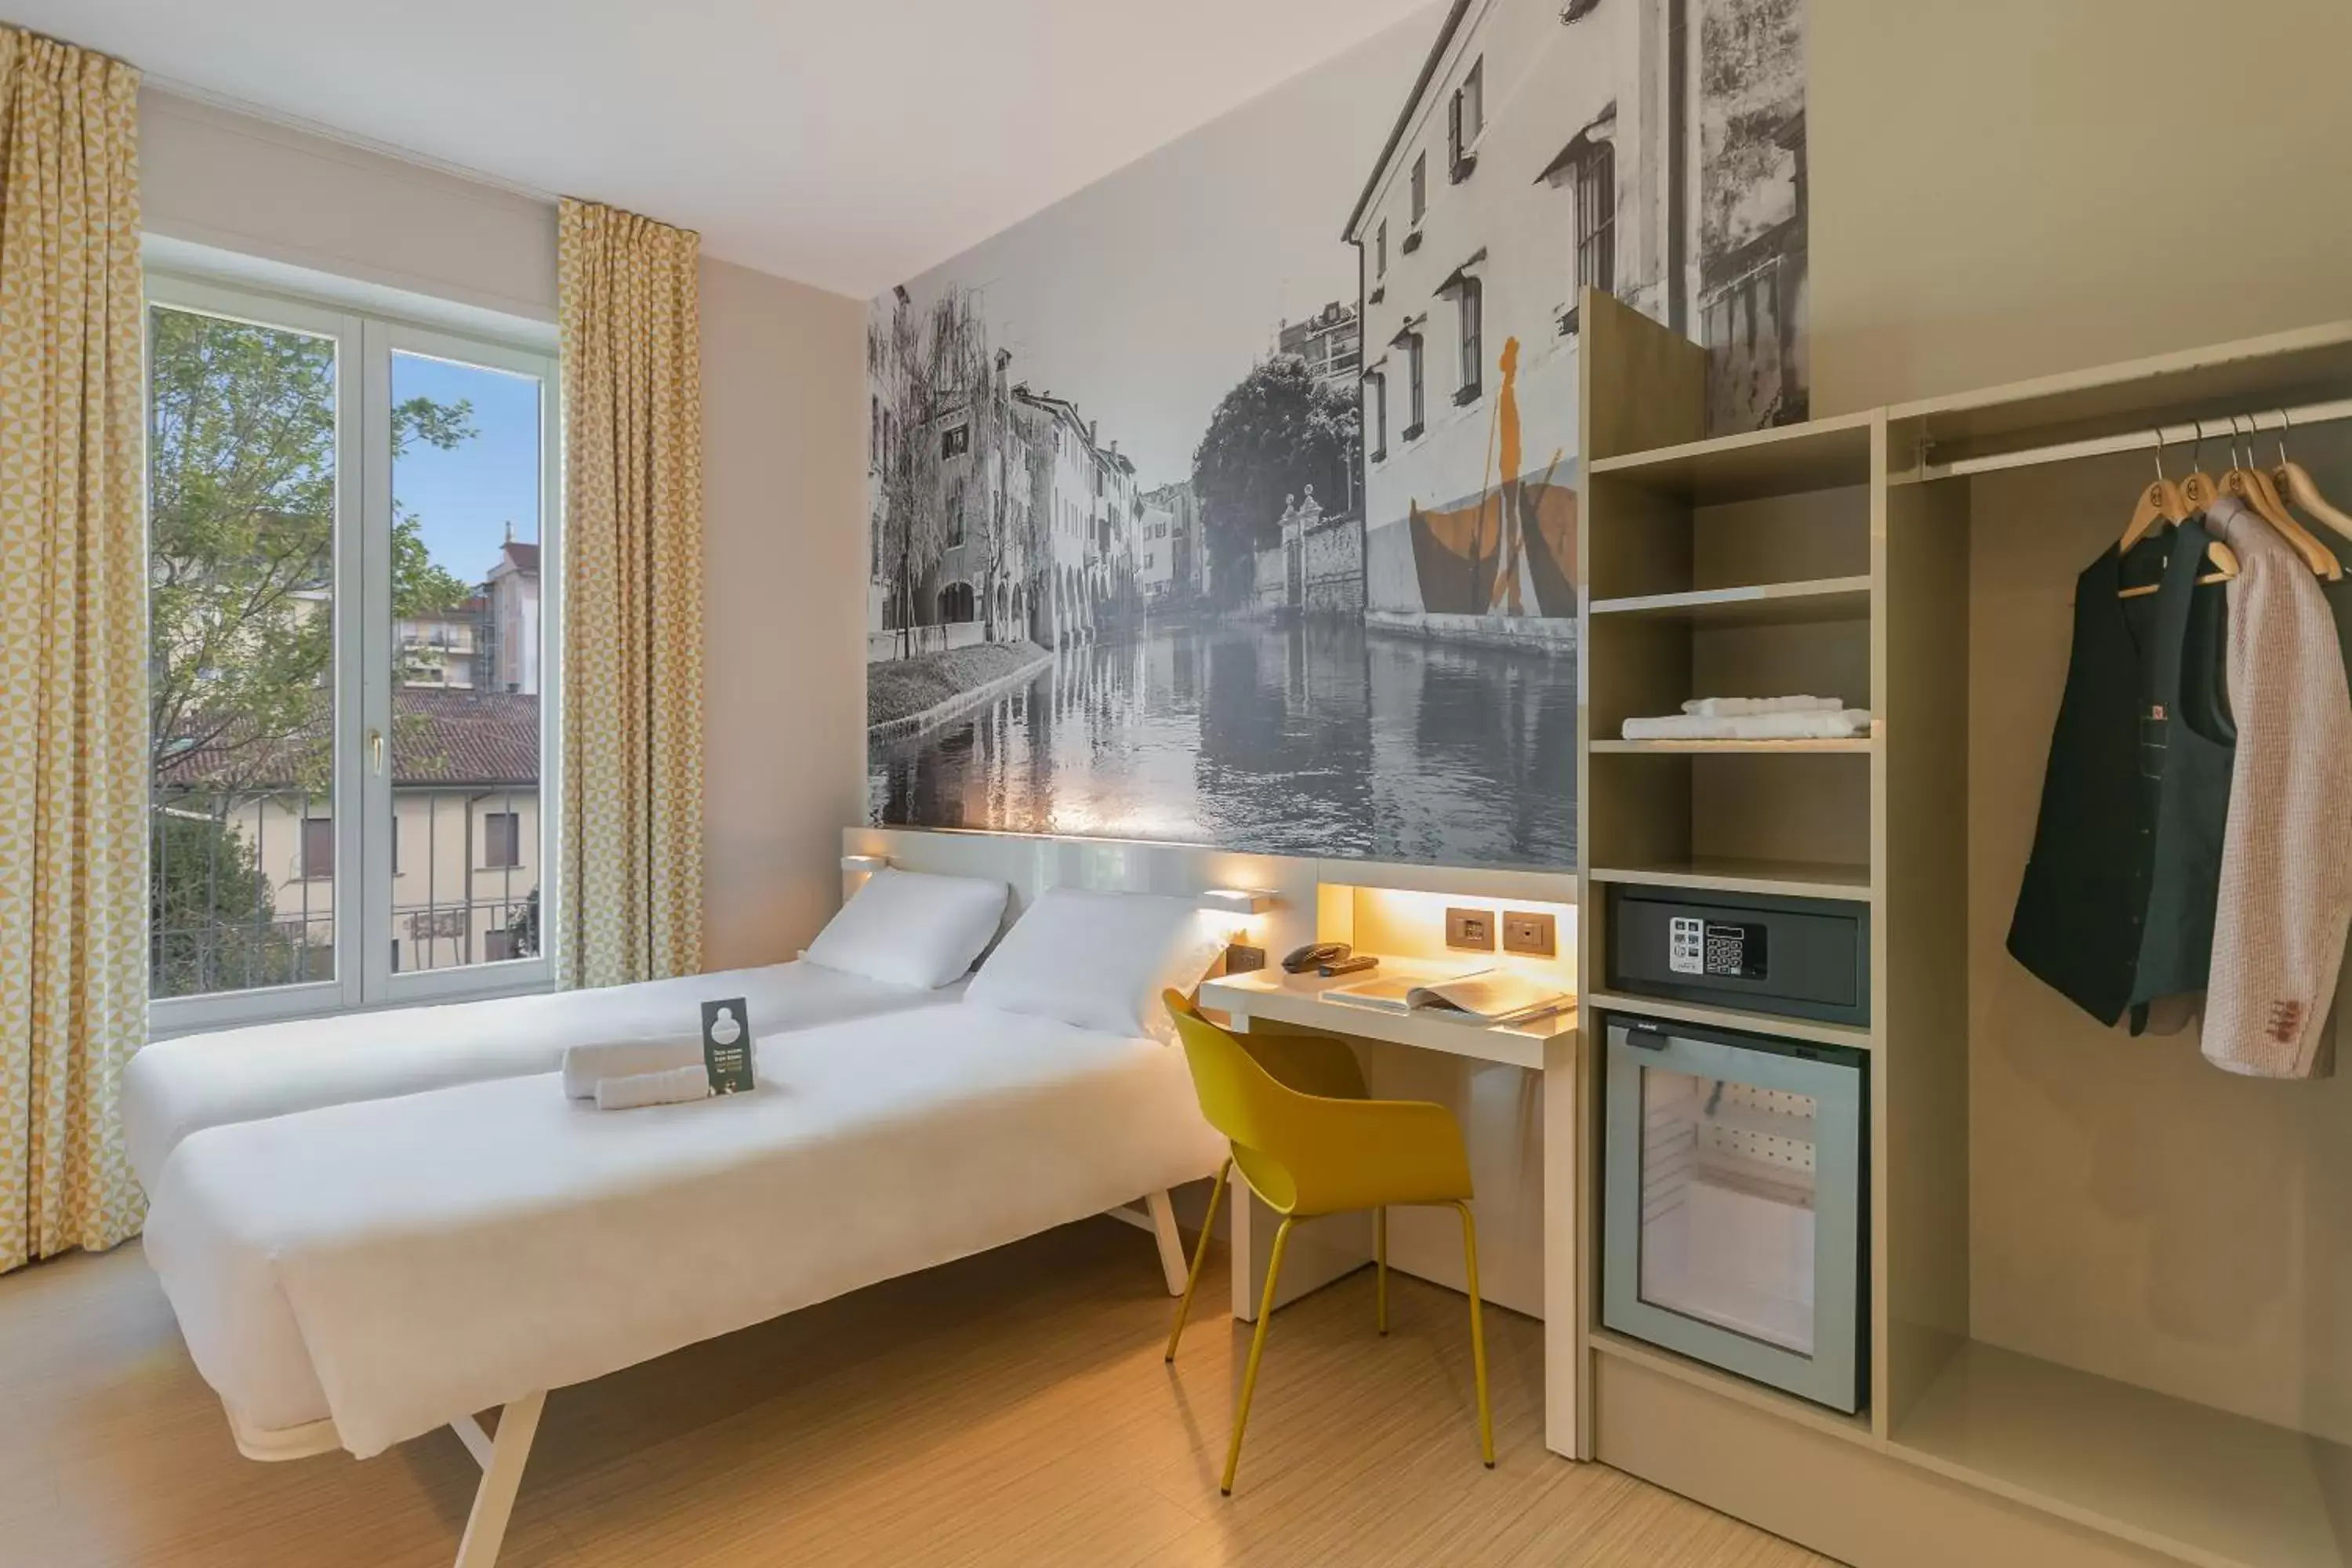 Bedroom in B&B Hotel Treviso